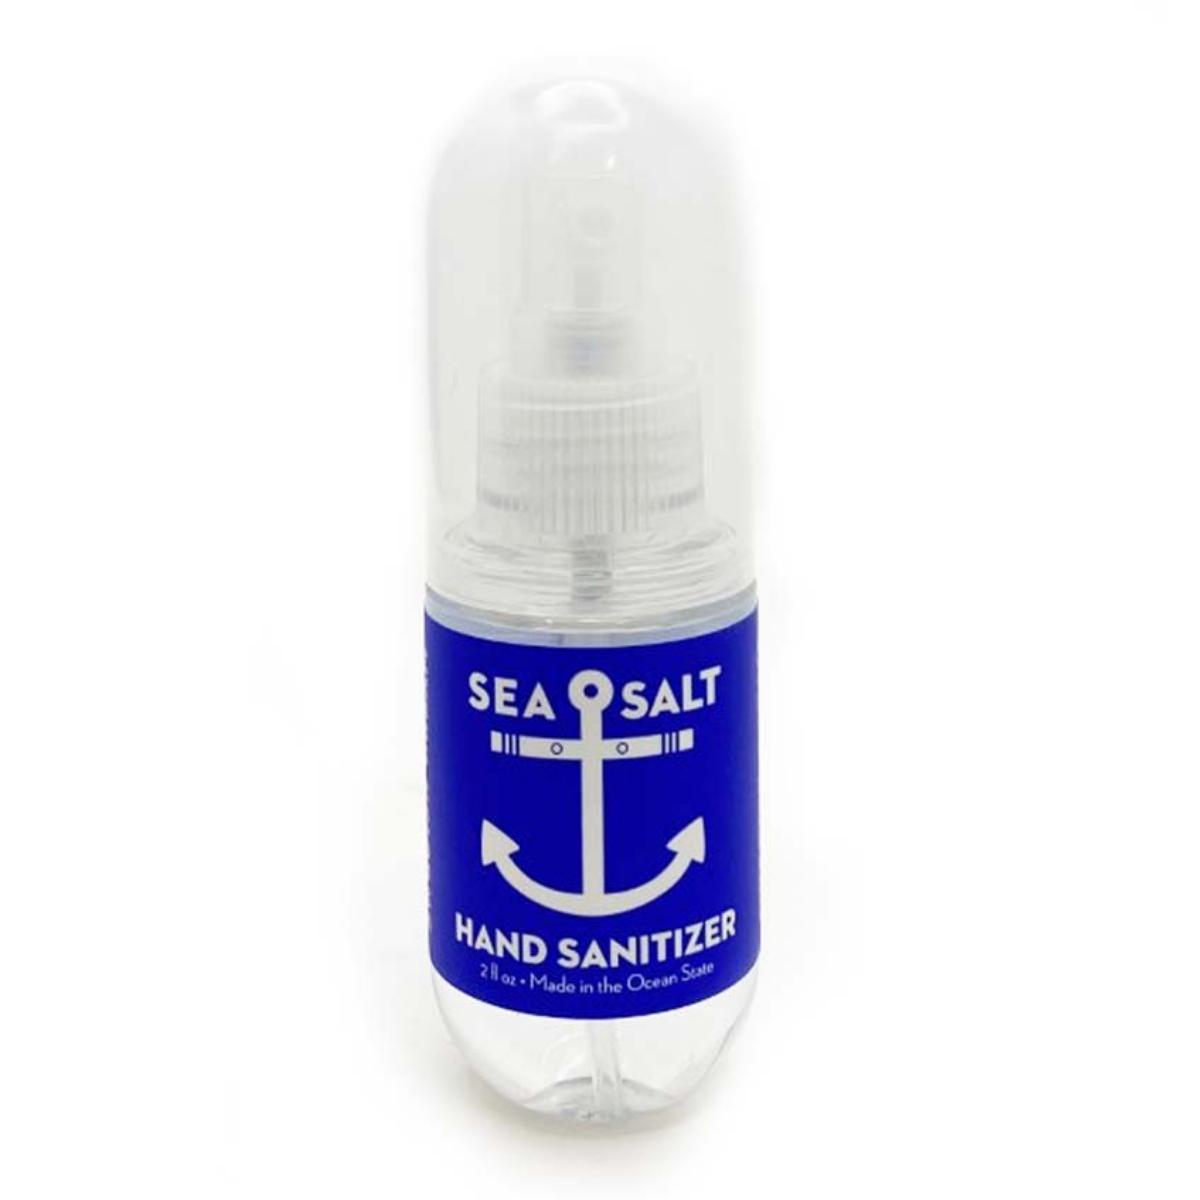 Primary image of Sea Salt Hand Sanitizer